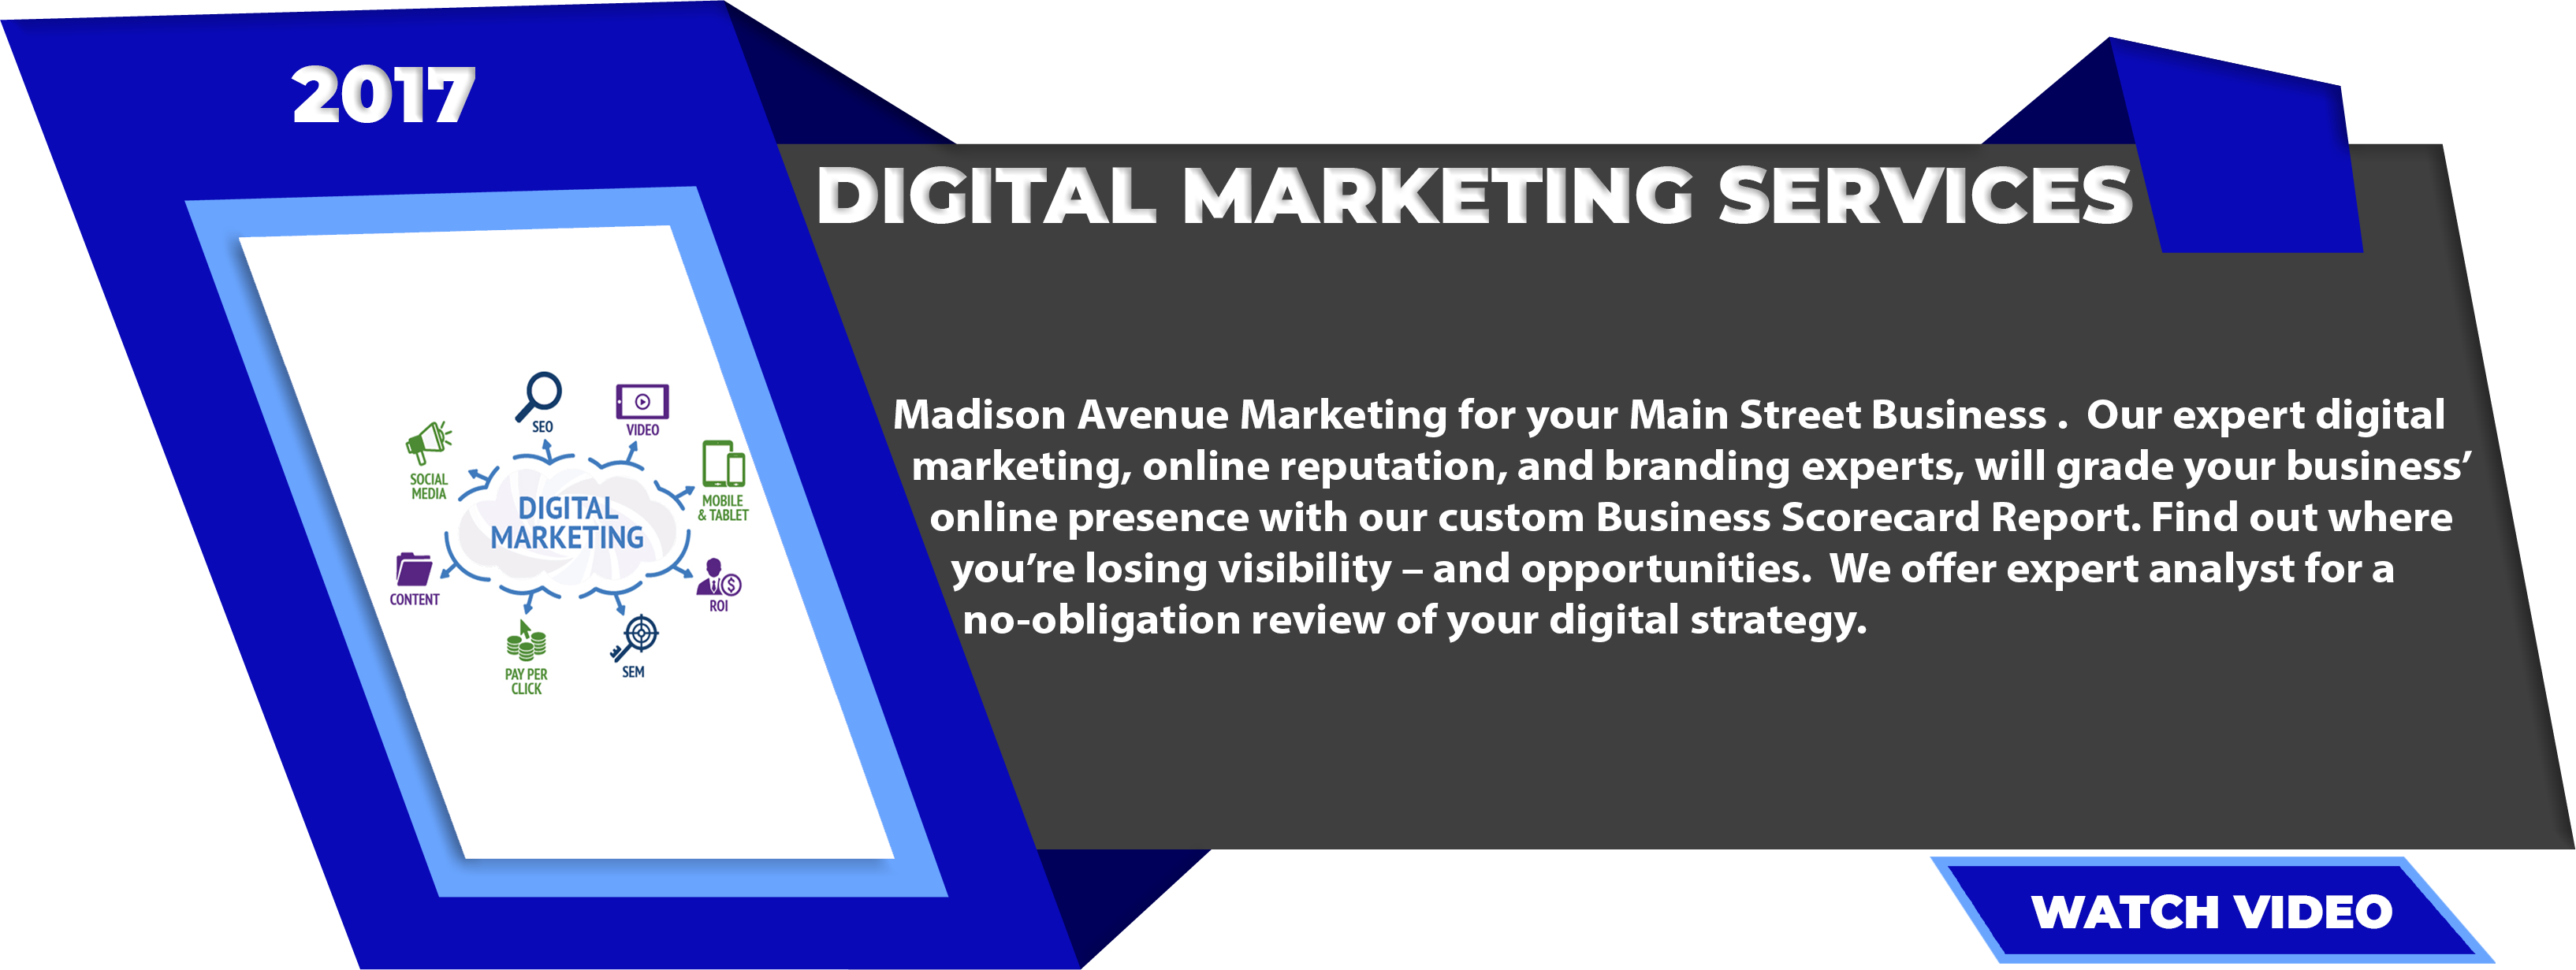 Digital Marketing Services 2017